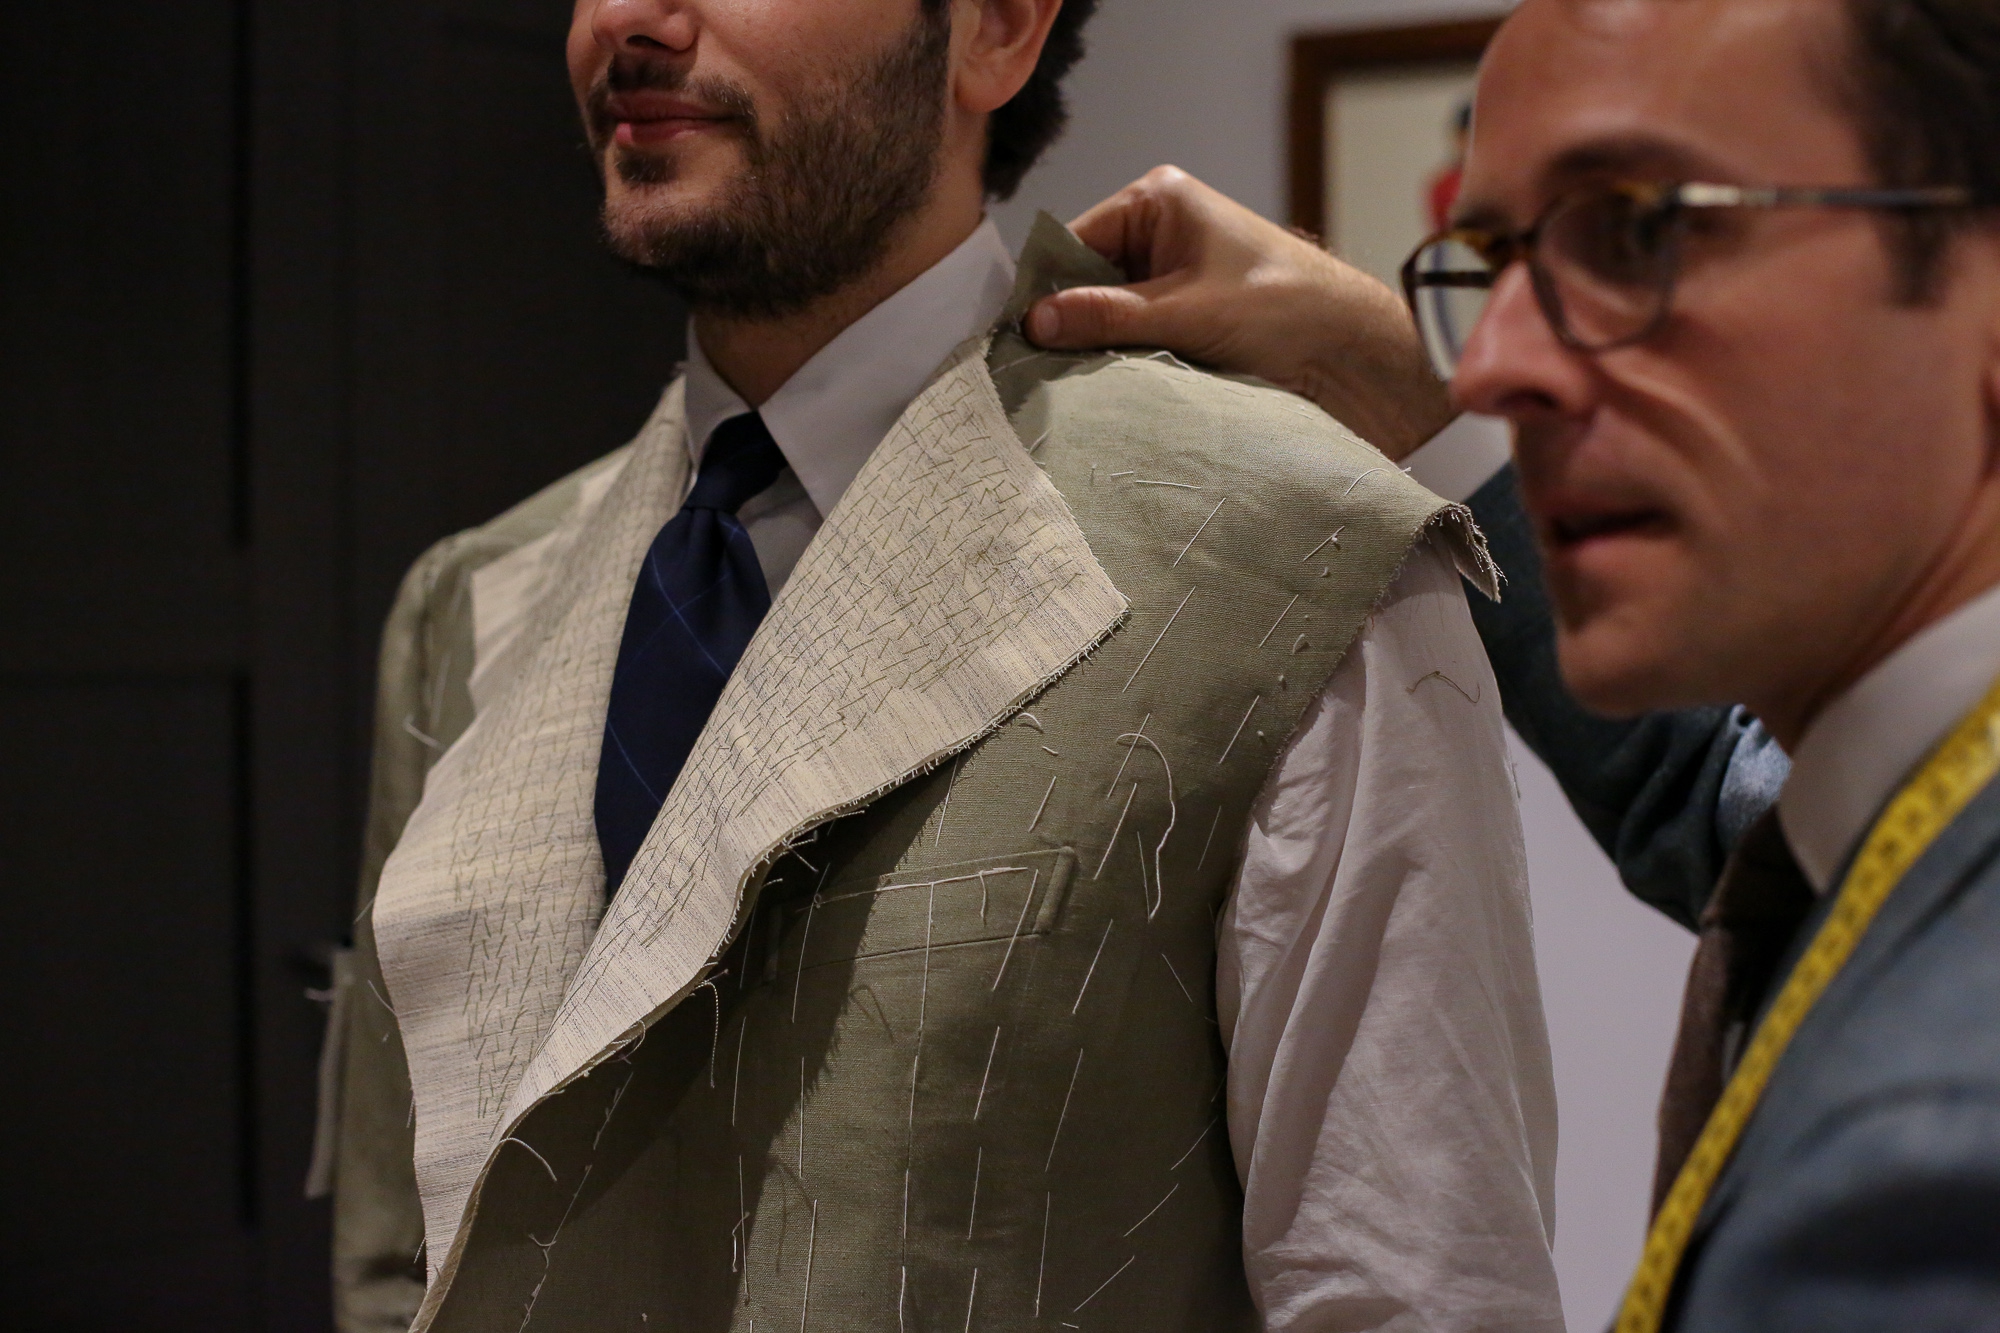 Sastrería Serna - Irish Linen Suit  The fittings & the final result